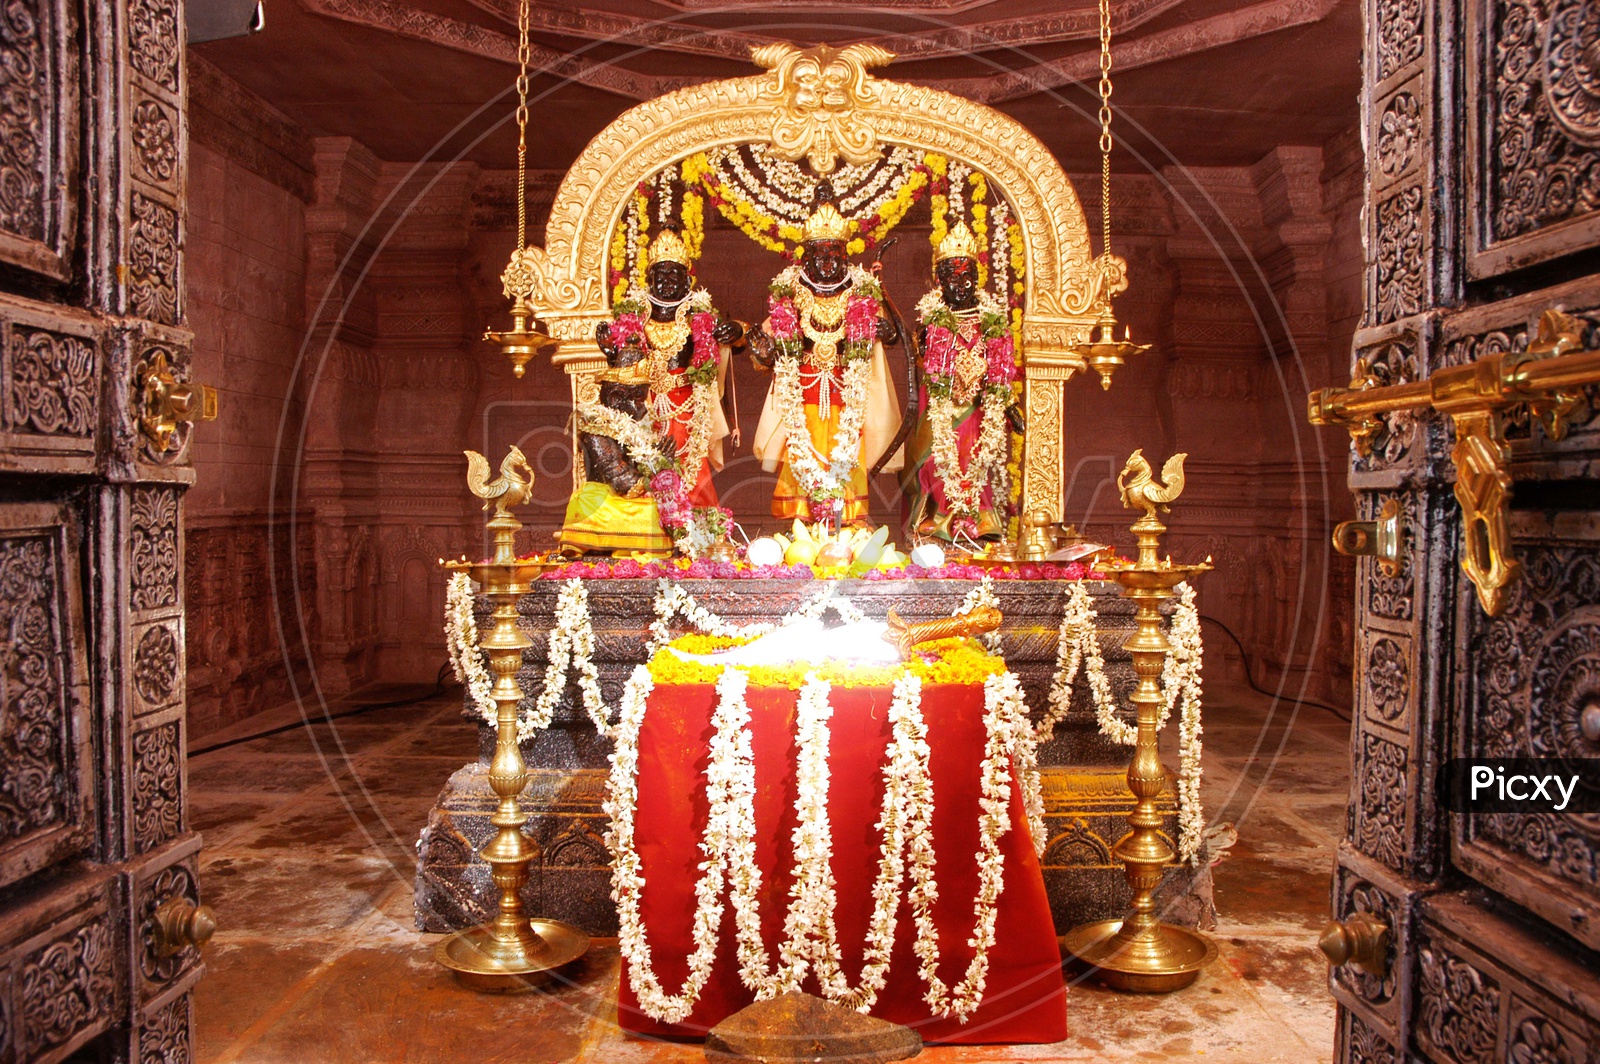 Sita Rama Lakshmana statues in a temple